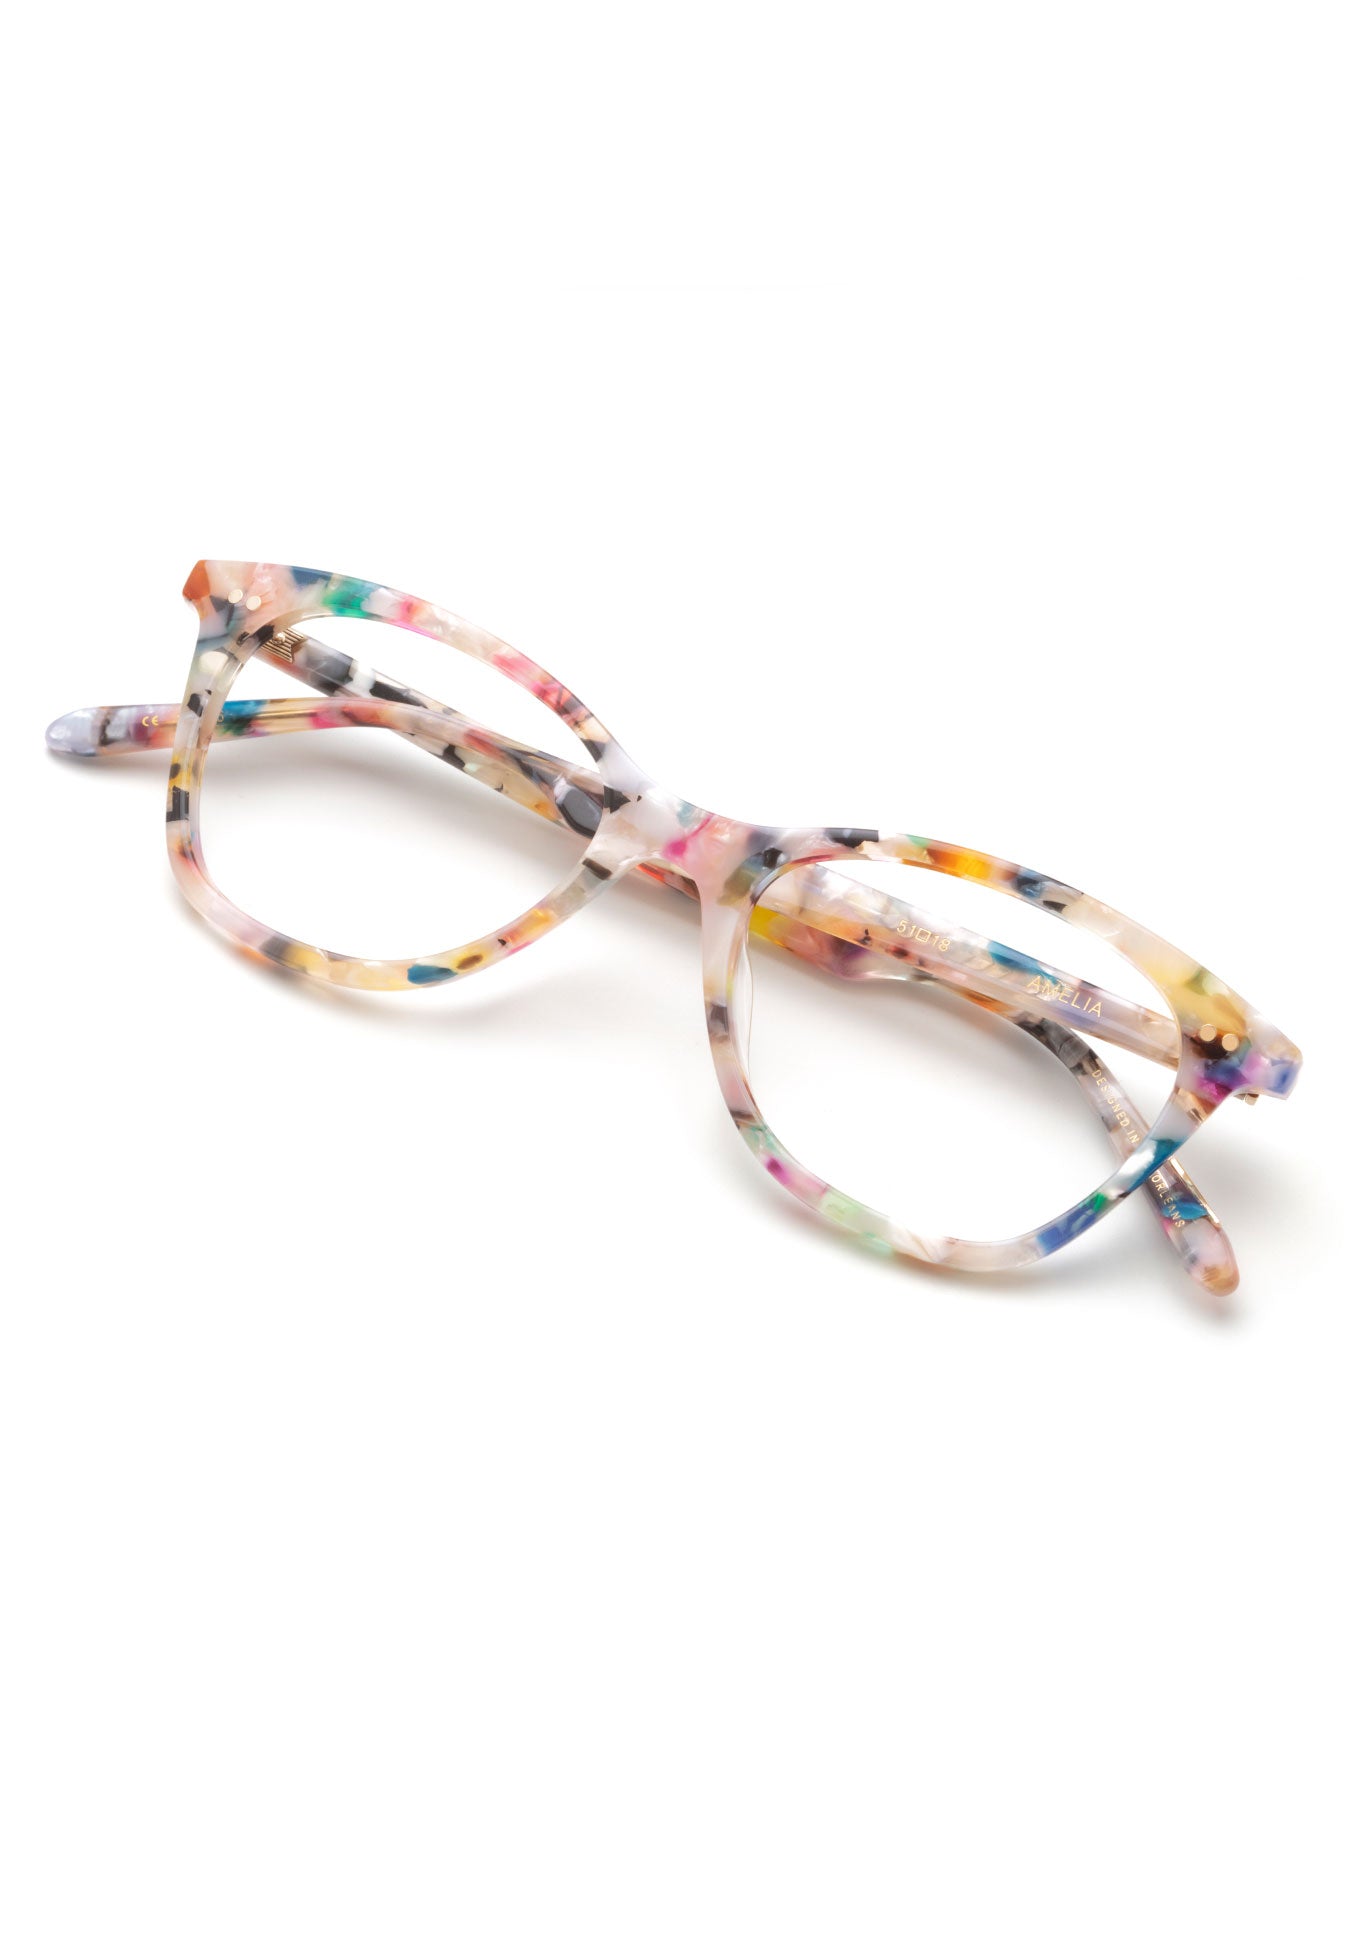 KREWE - Designer Eyeglasses - AMELIA | Gelato Handcrafted, luxury colorful tortoise shell acetate eyeglasses. Similar to Oliver Peoples eyeglasses, moscot eyeglasses, warby parker eyeglasses